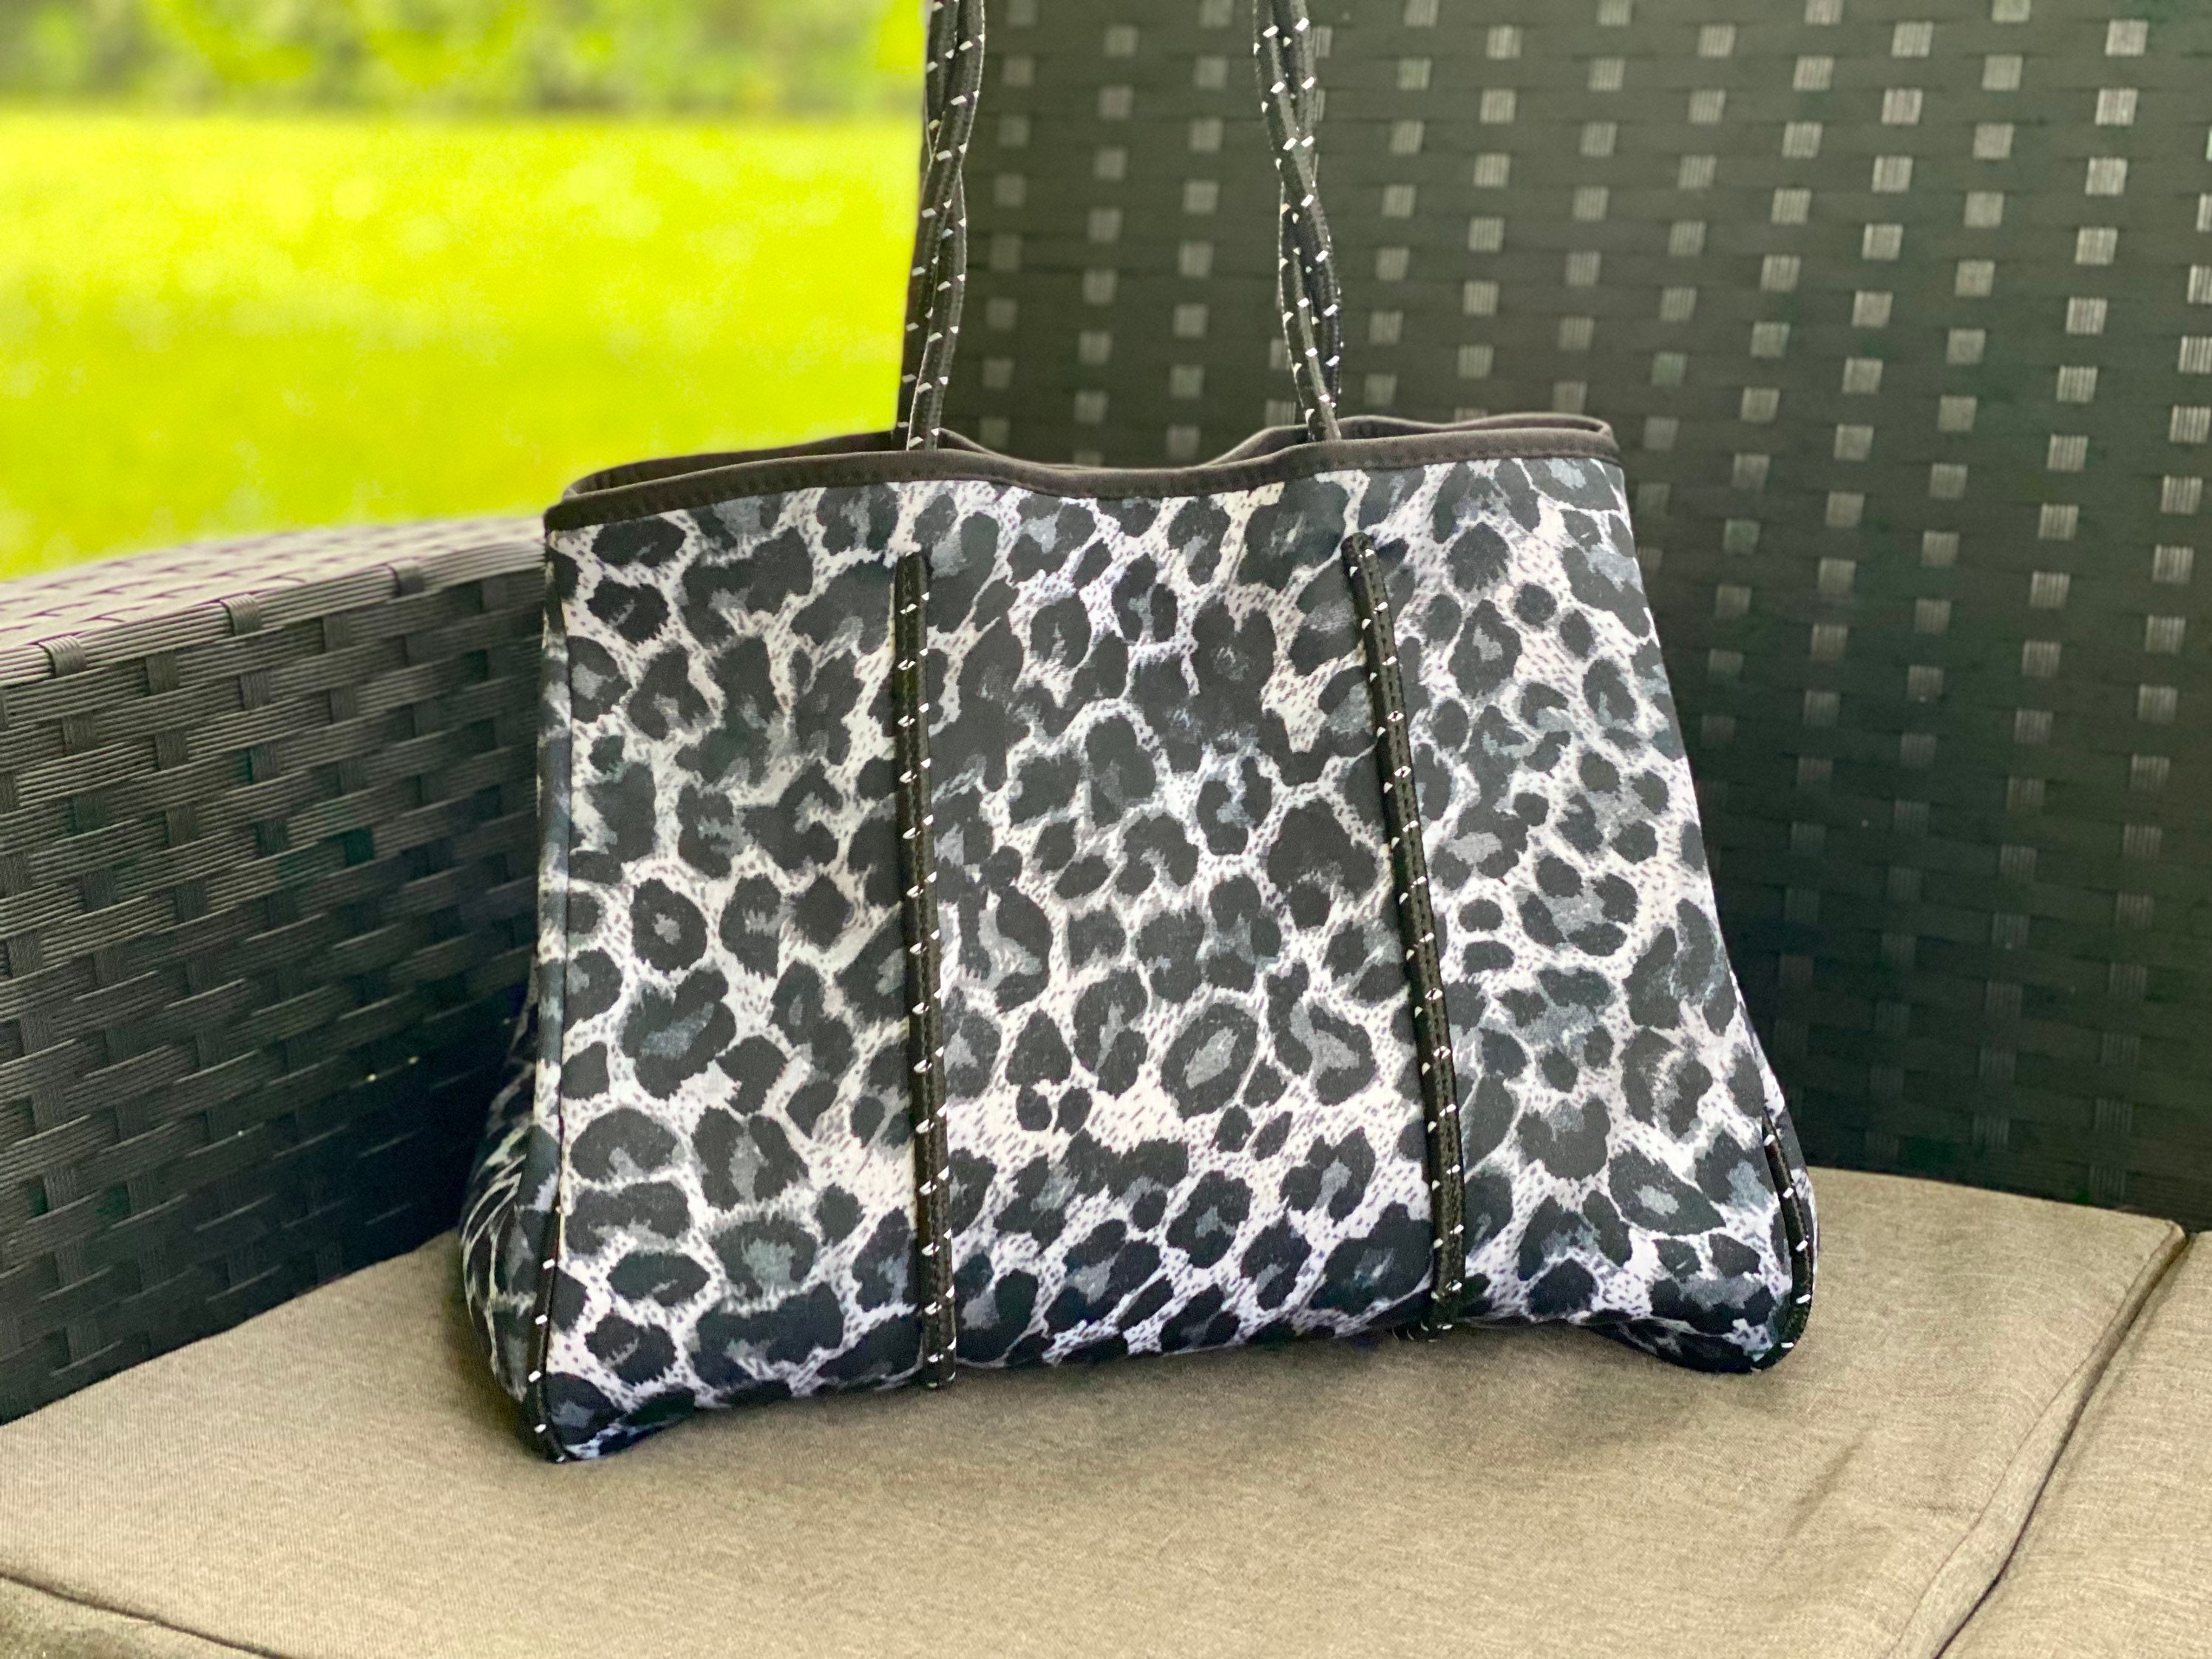 LEOPARD TOTE BAG Designer Handbag Leopard Print Neoprene | Etsy